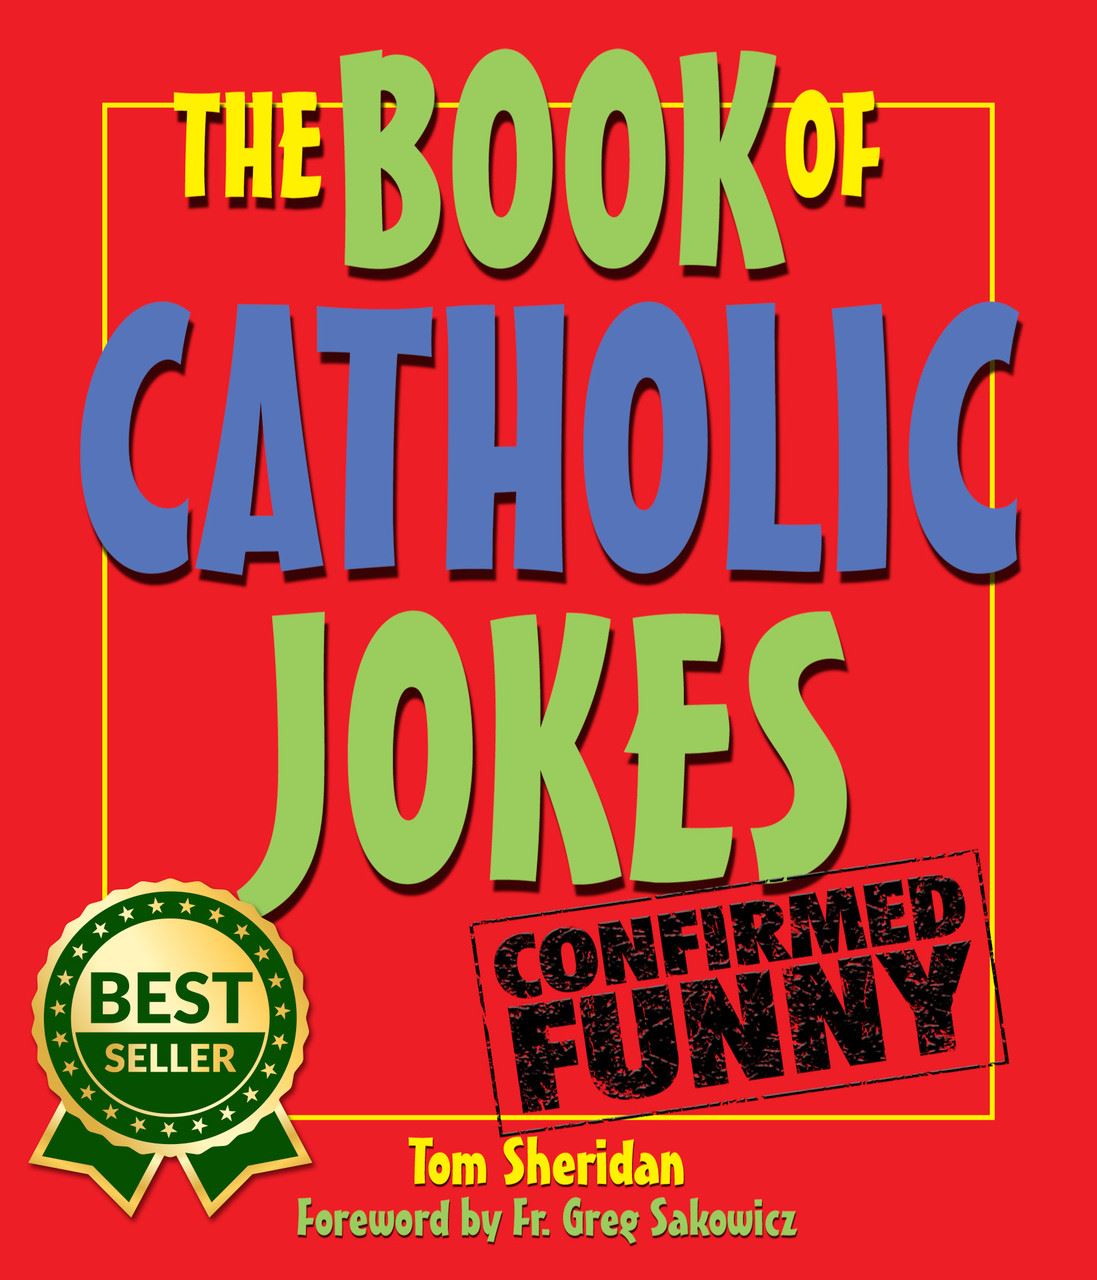 Book Of Catholic Jokes